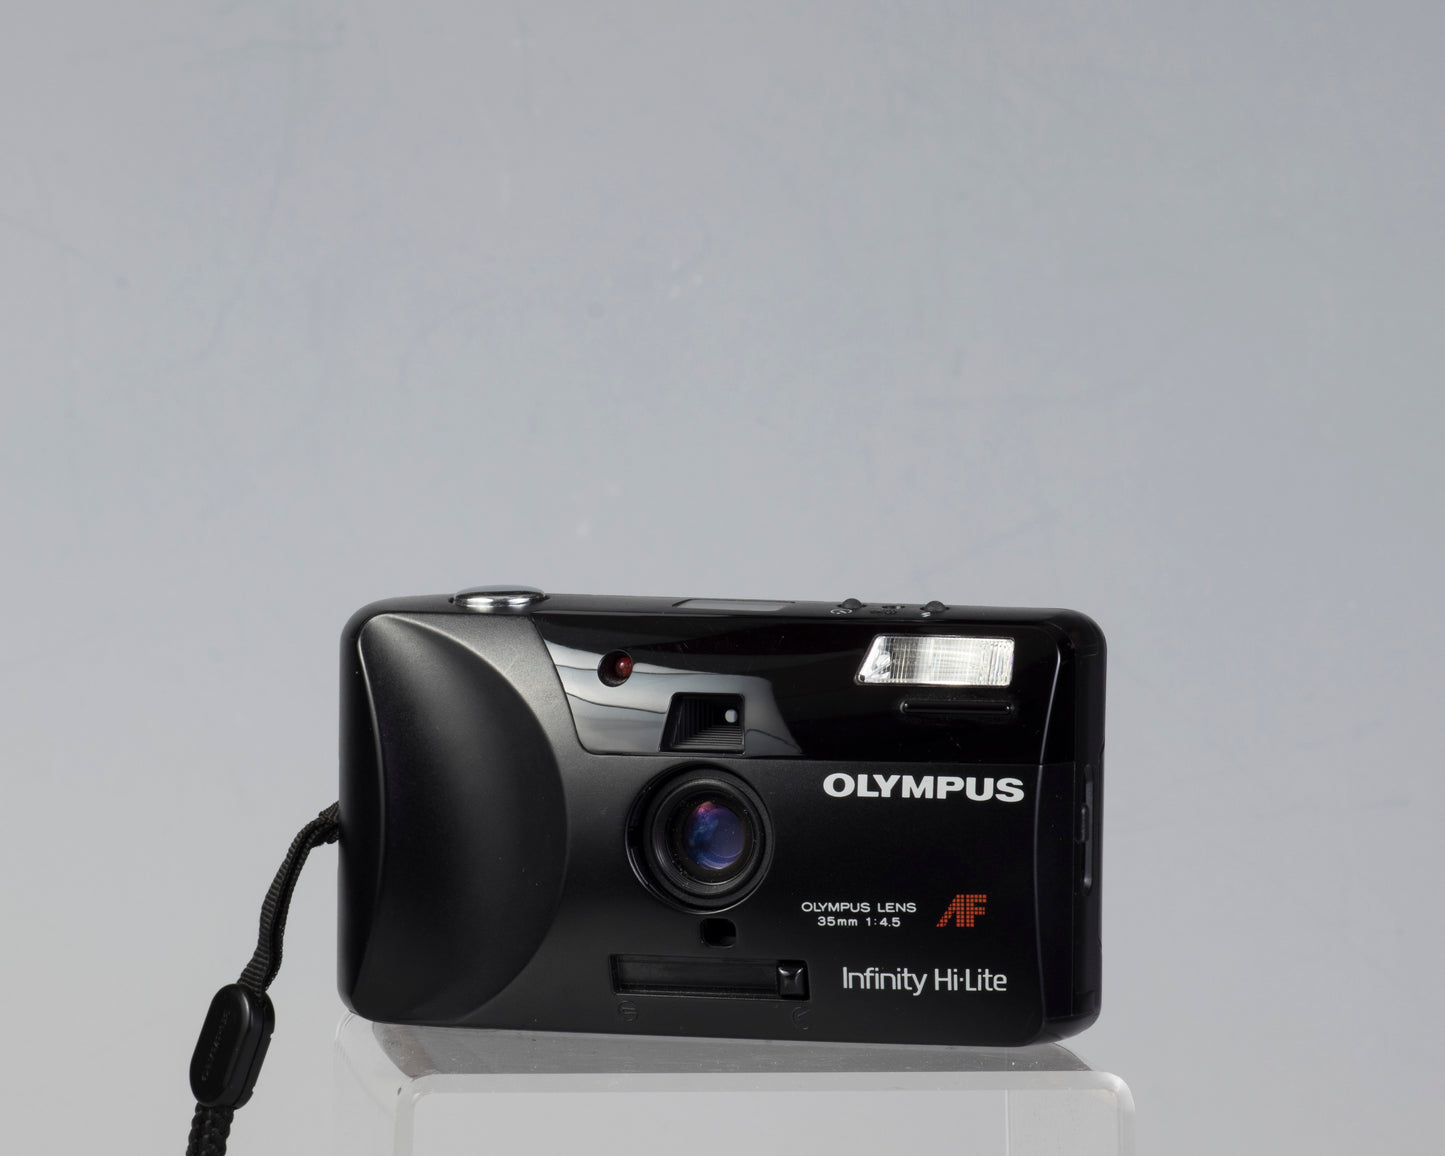 Appareil photo Olympus Infinity Hi-Lite 35 mm (série 5056801)